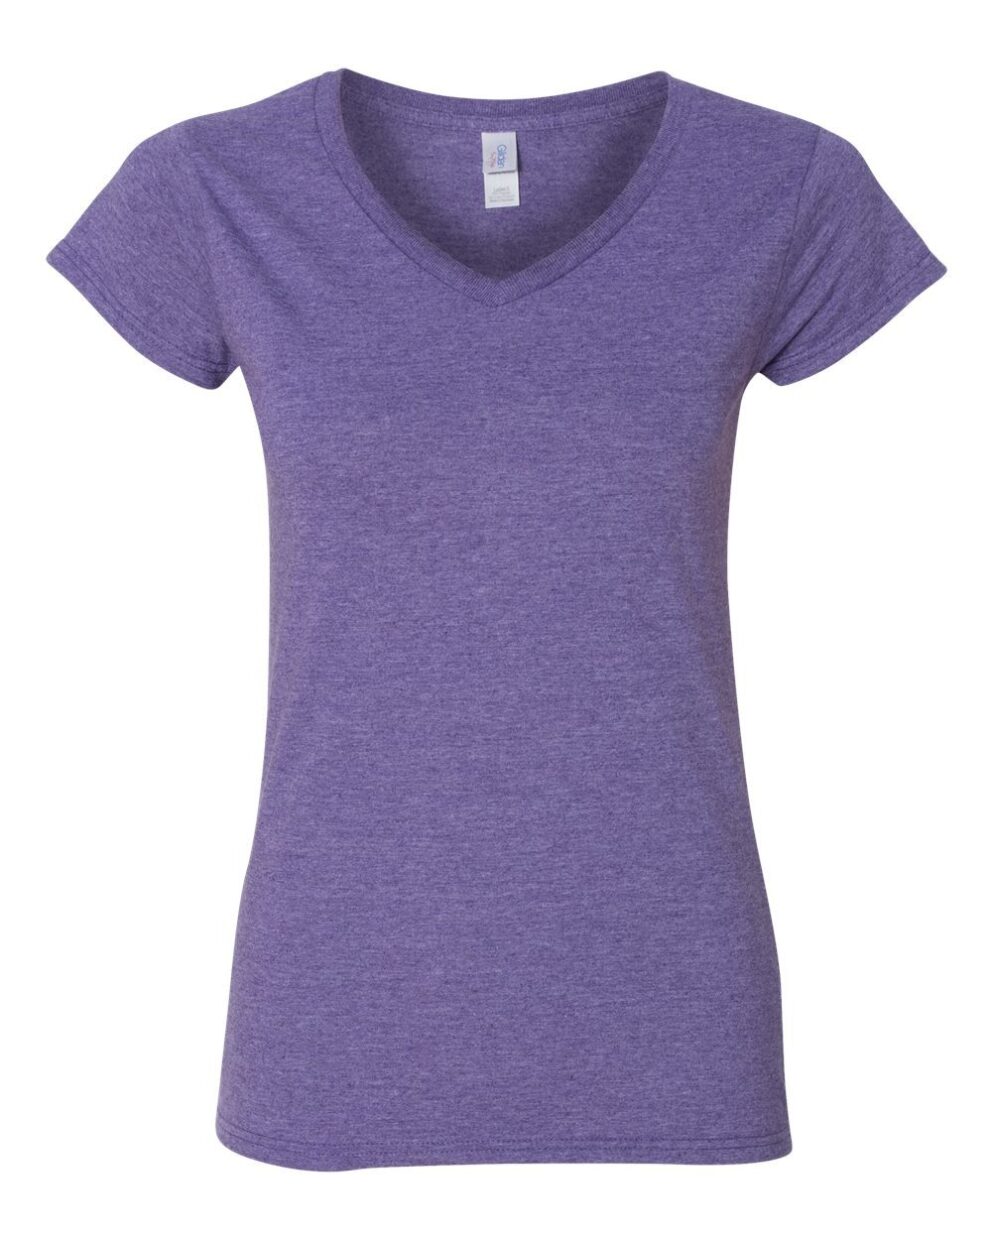 Ladies V-neck Heather Purple Cotton T-shirt